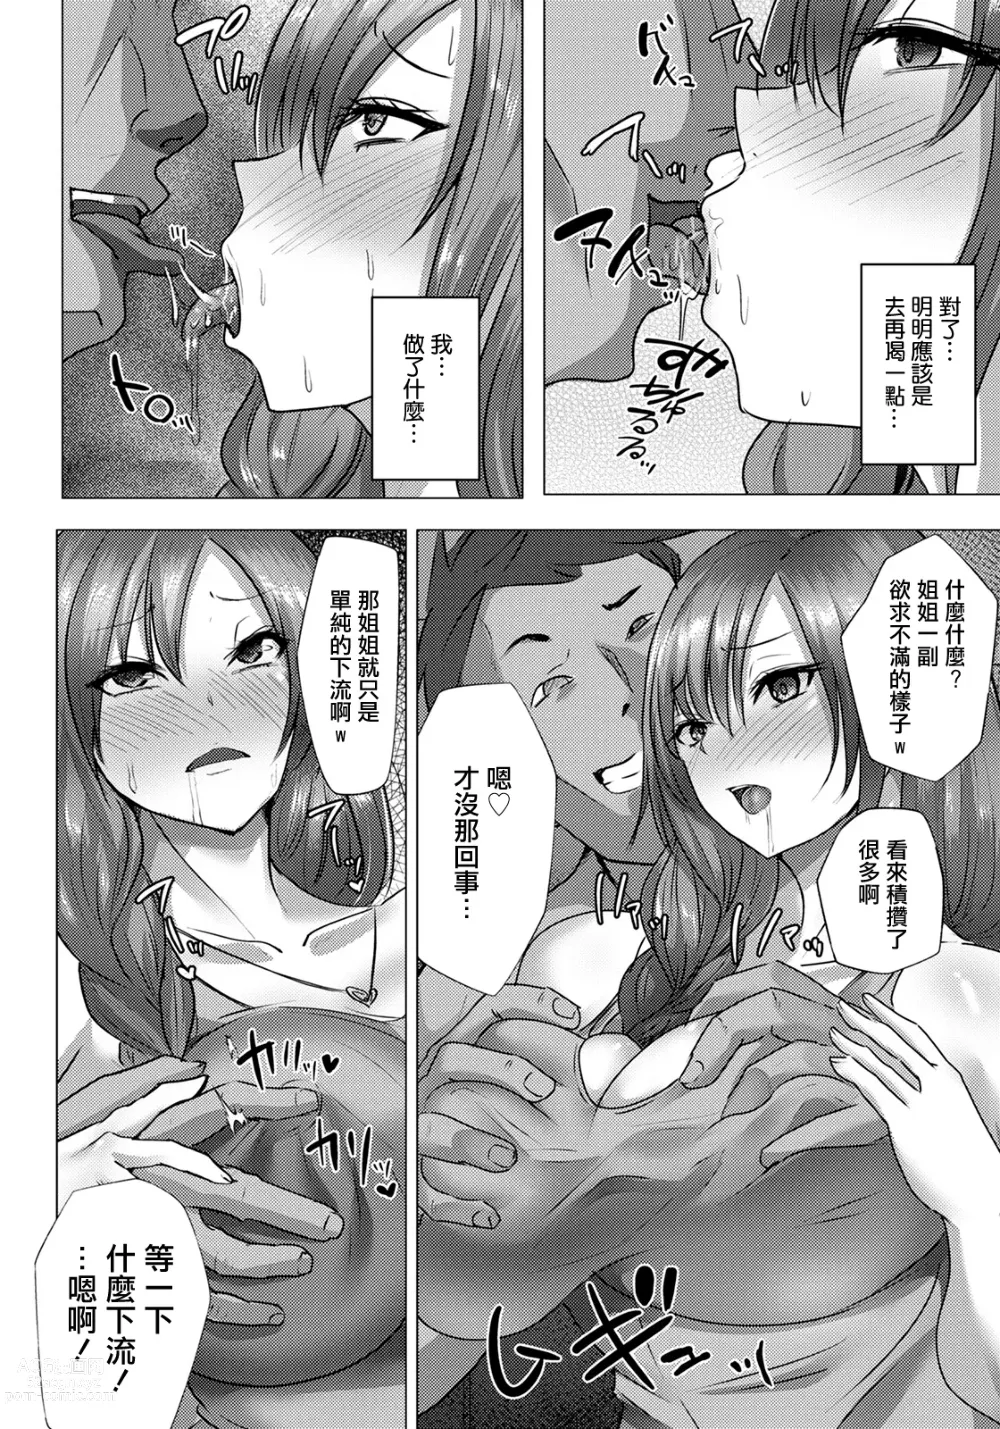 Page 5 of manga NTR婚后蜜月